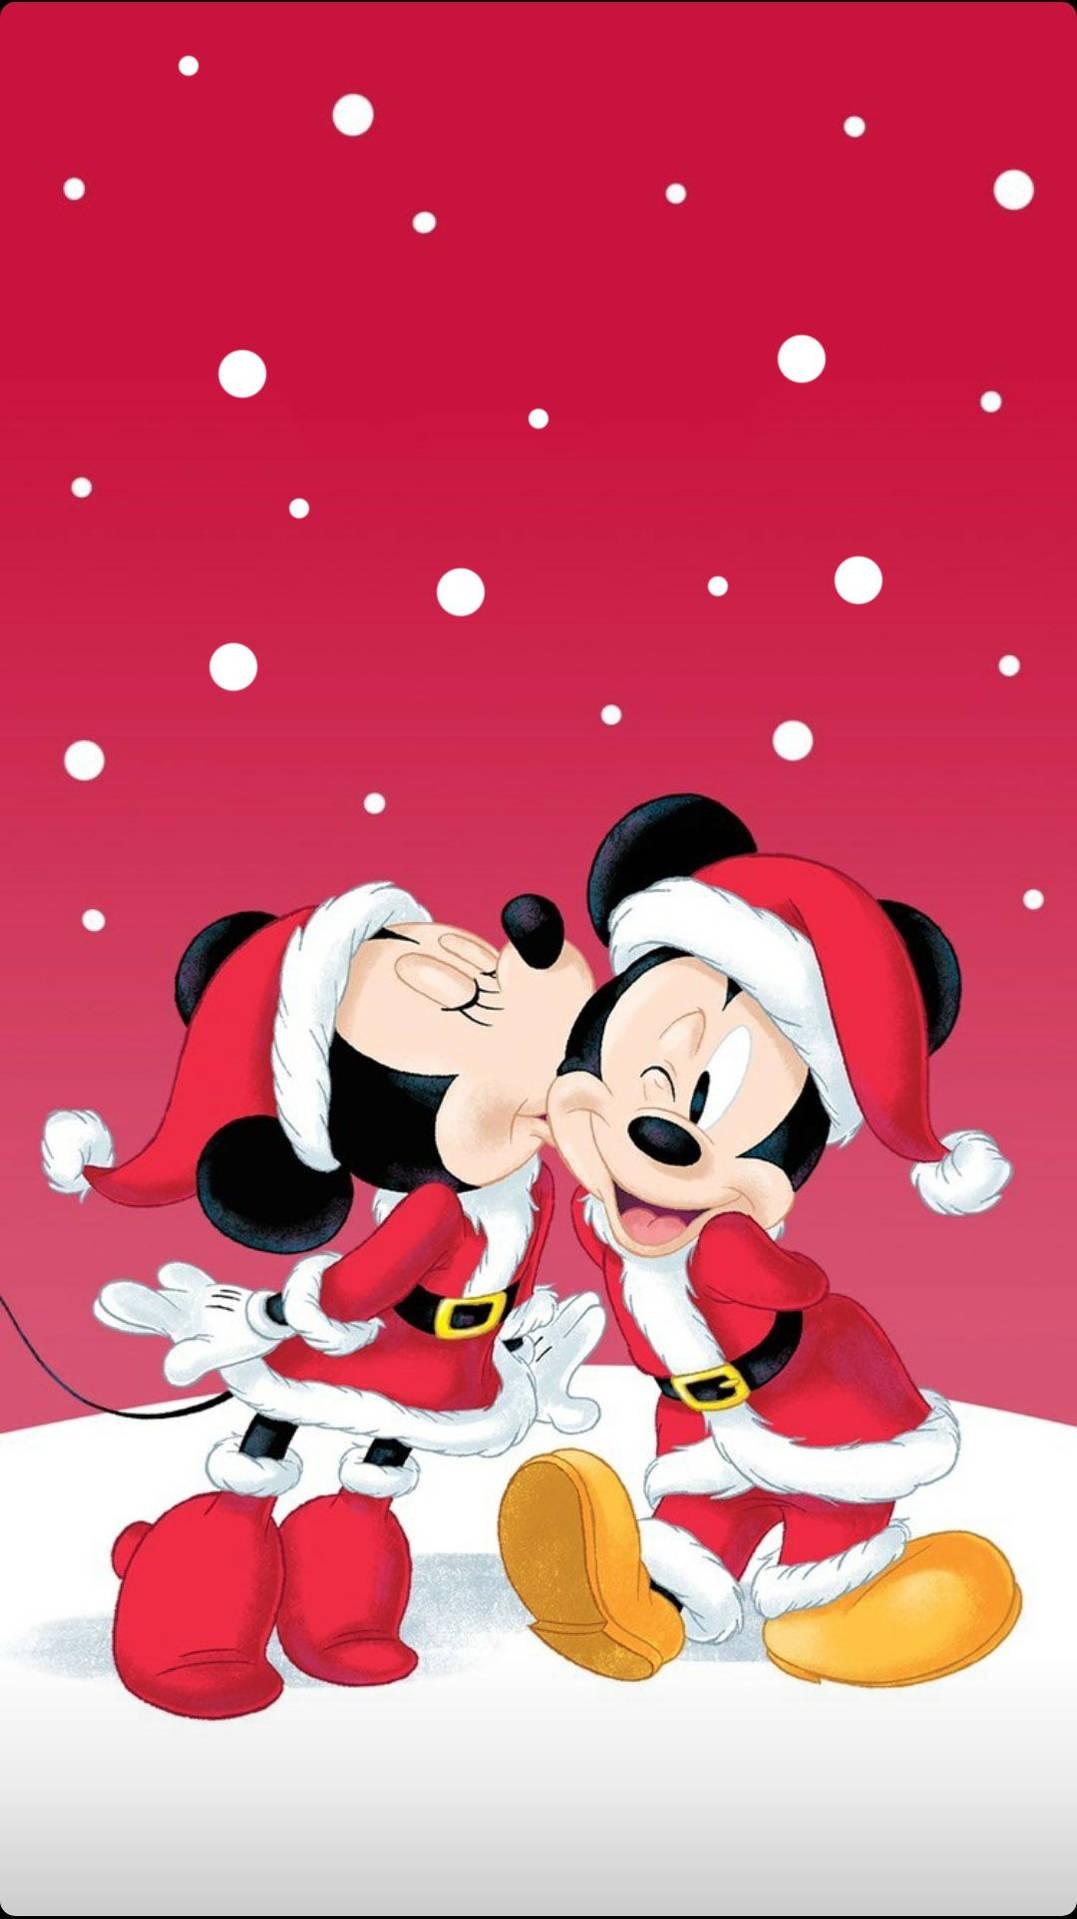  Disney Christmas Iphone Wallpapers